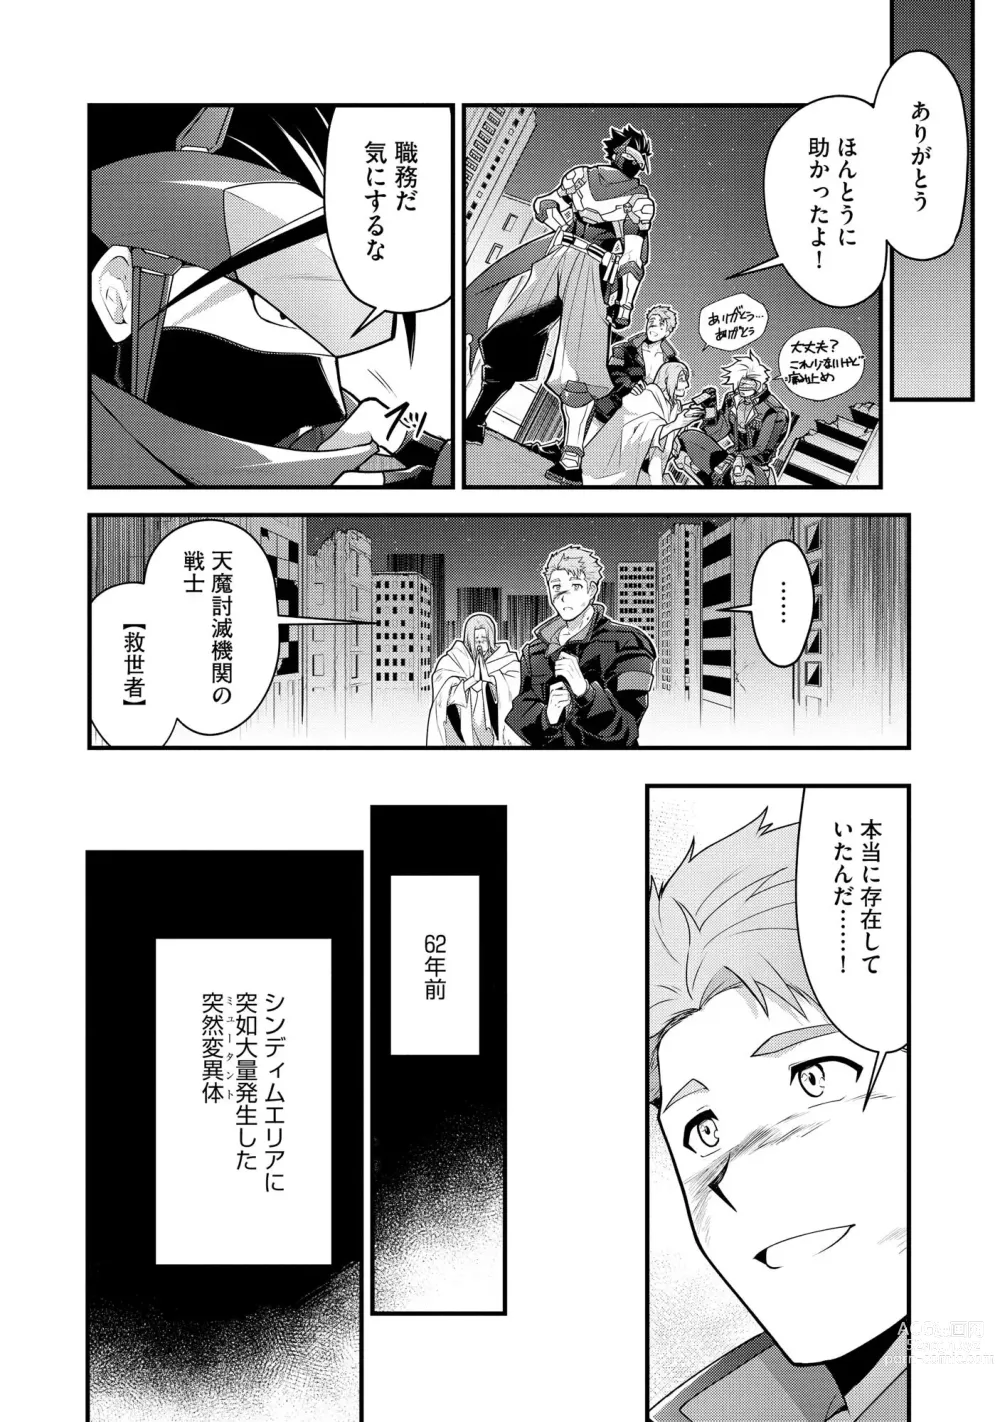 Page 10 of manga Haiboku Eiyuu, Ryoujoku